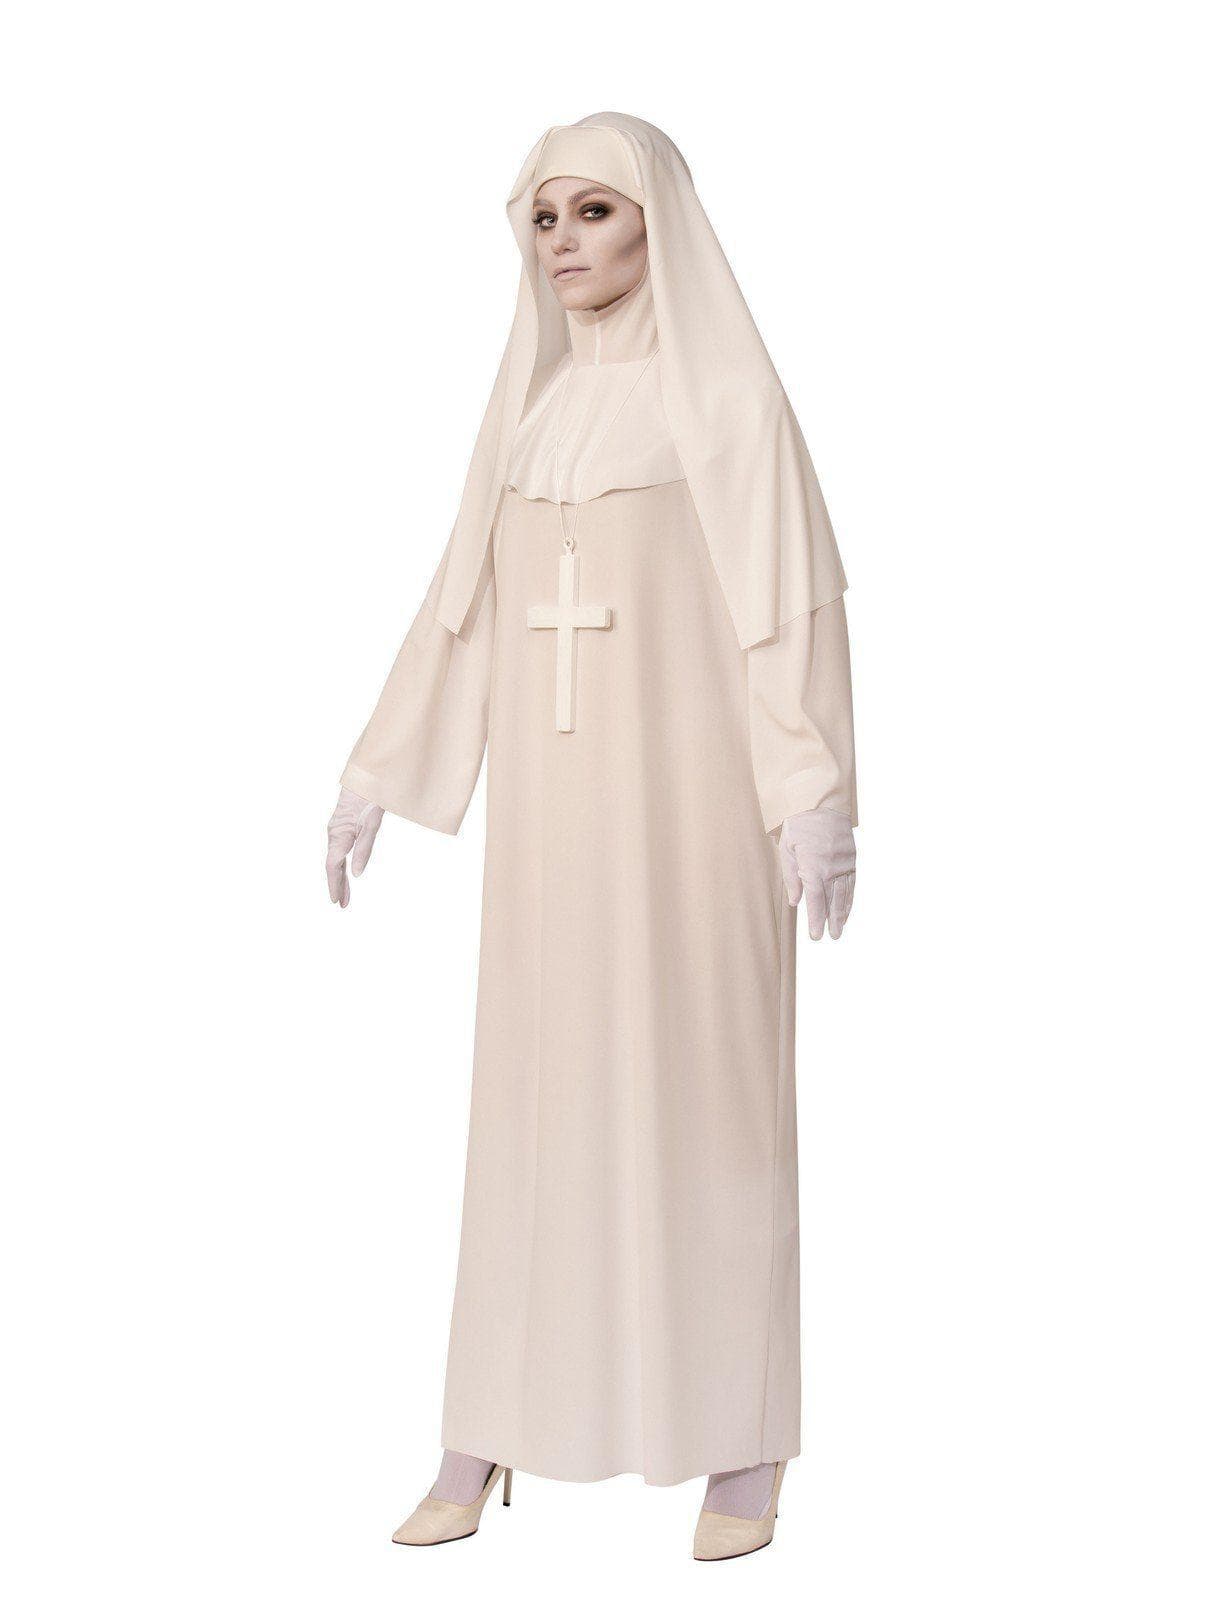 Women's Ghostly Nun Costume - costumes.com